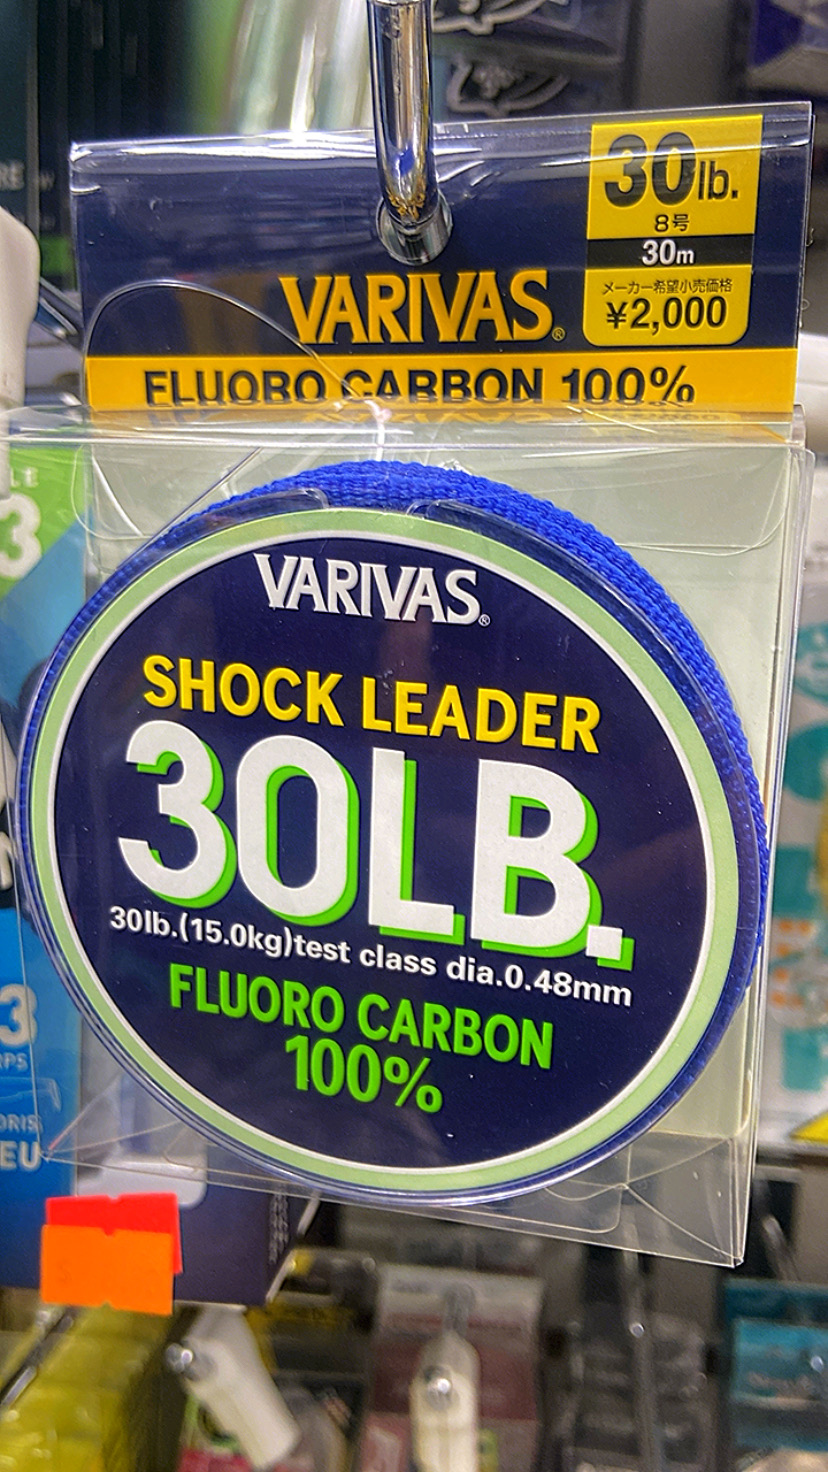 Flourocarbono Varivas Shock Leader 30 lbs 0.48mm 30 mts